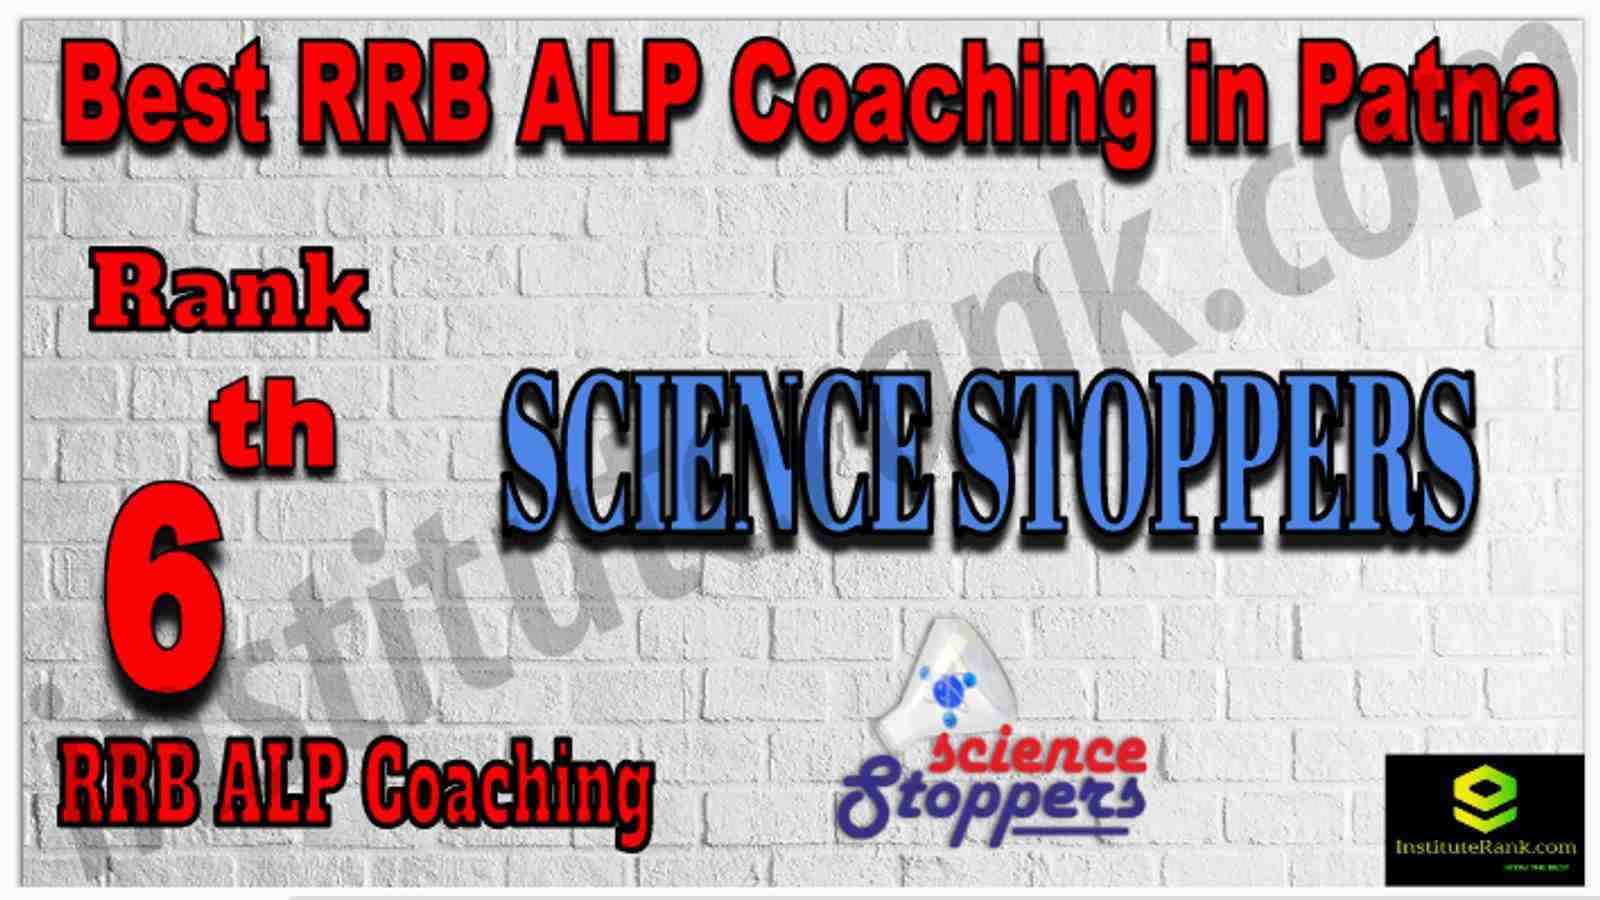 Rank 6th RRB ALP Coaching in Patna